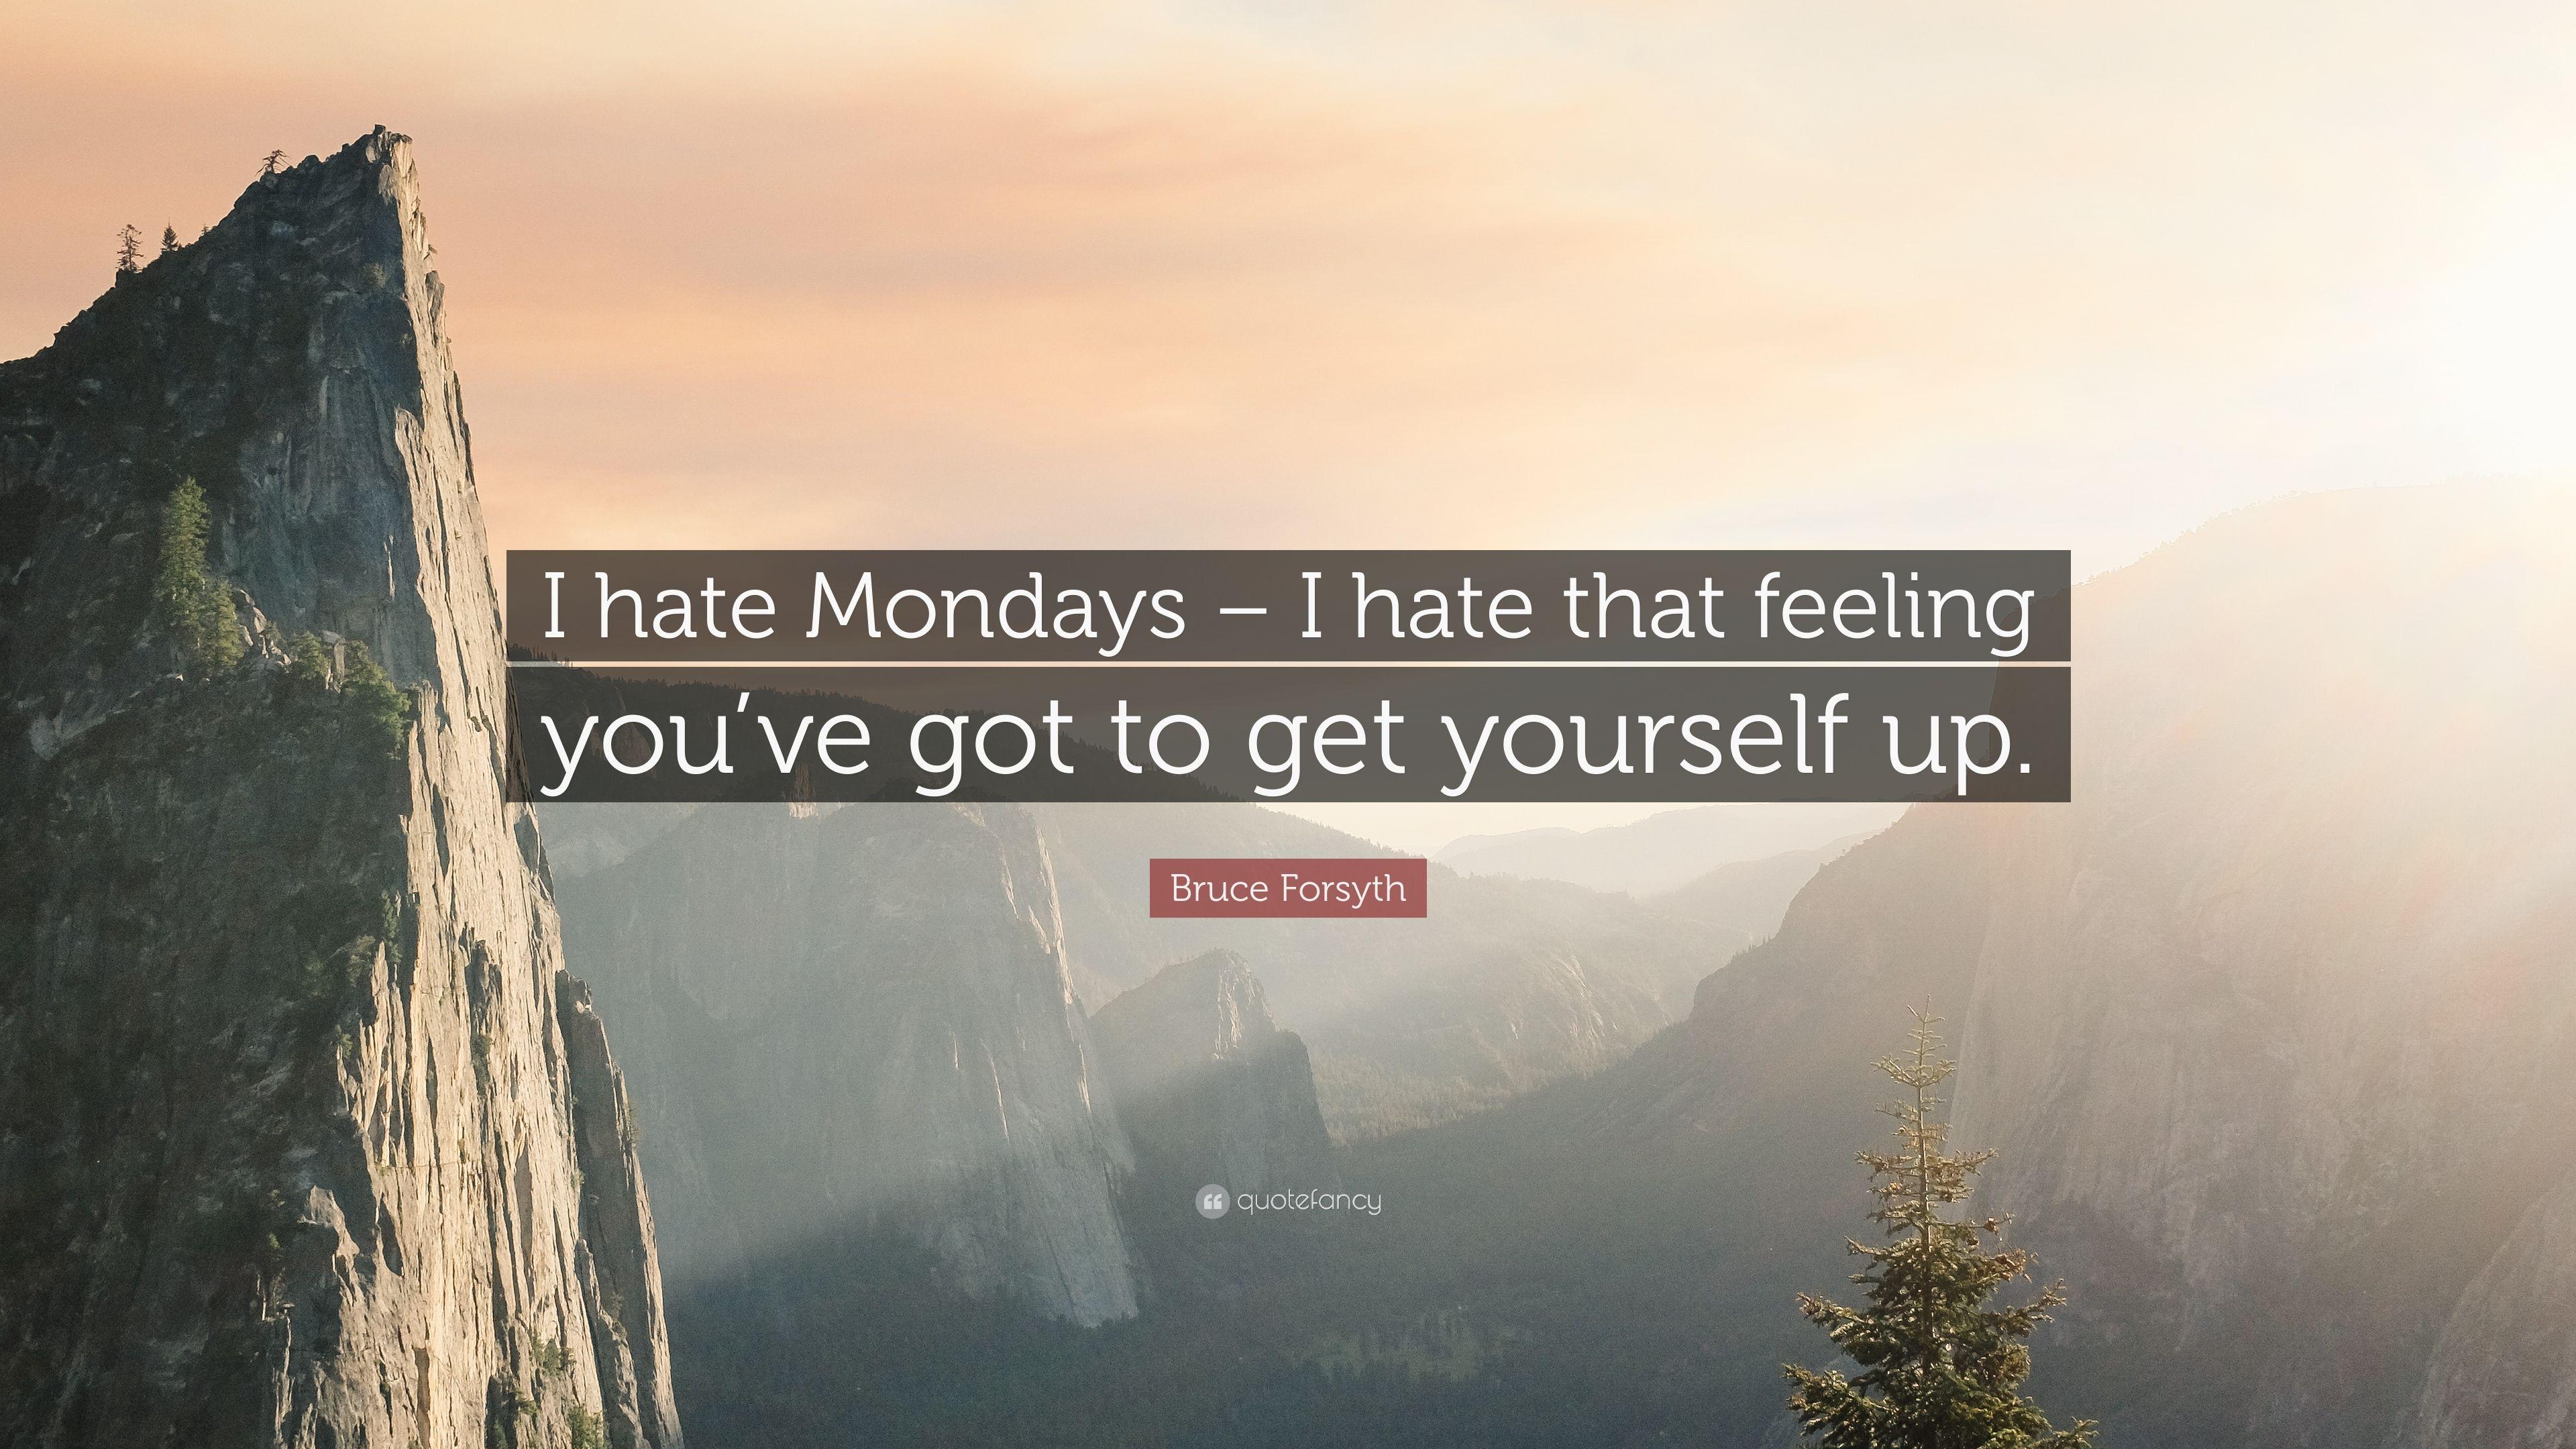 Bruce Forsyth Quote: “I hate Mondays